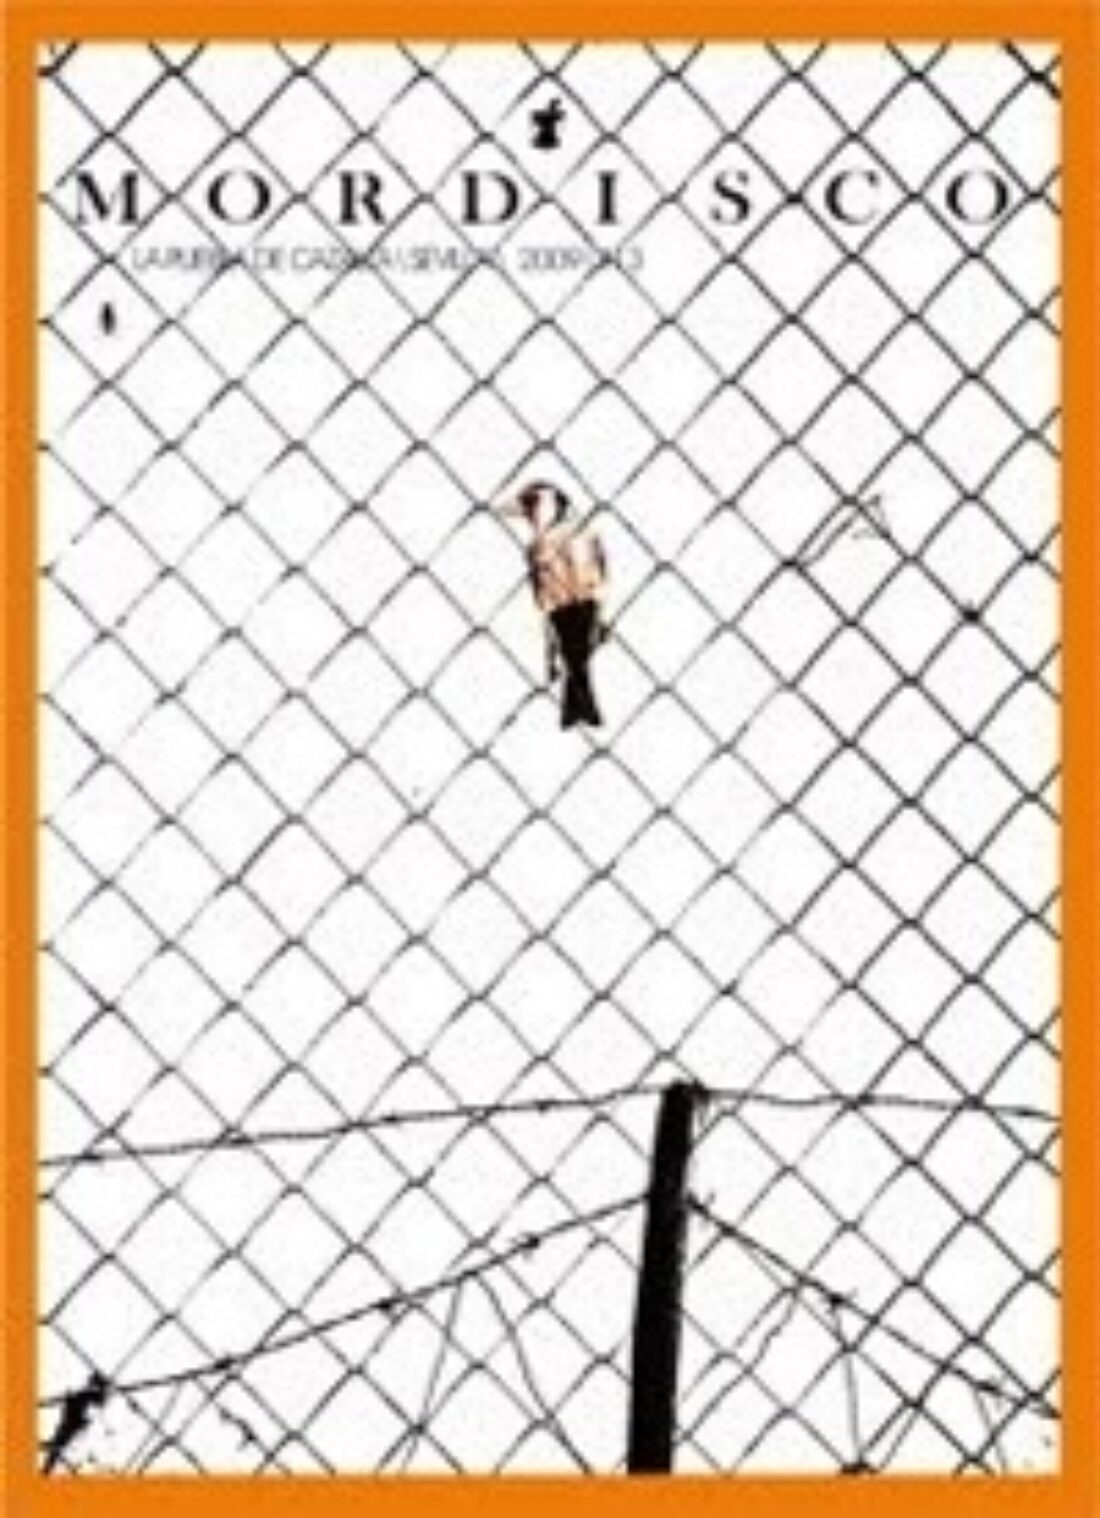 16 julio, Madrid : nº 3 de la revista Mordisco : «Cárceles»